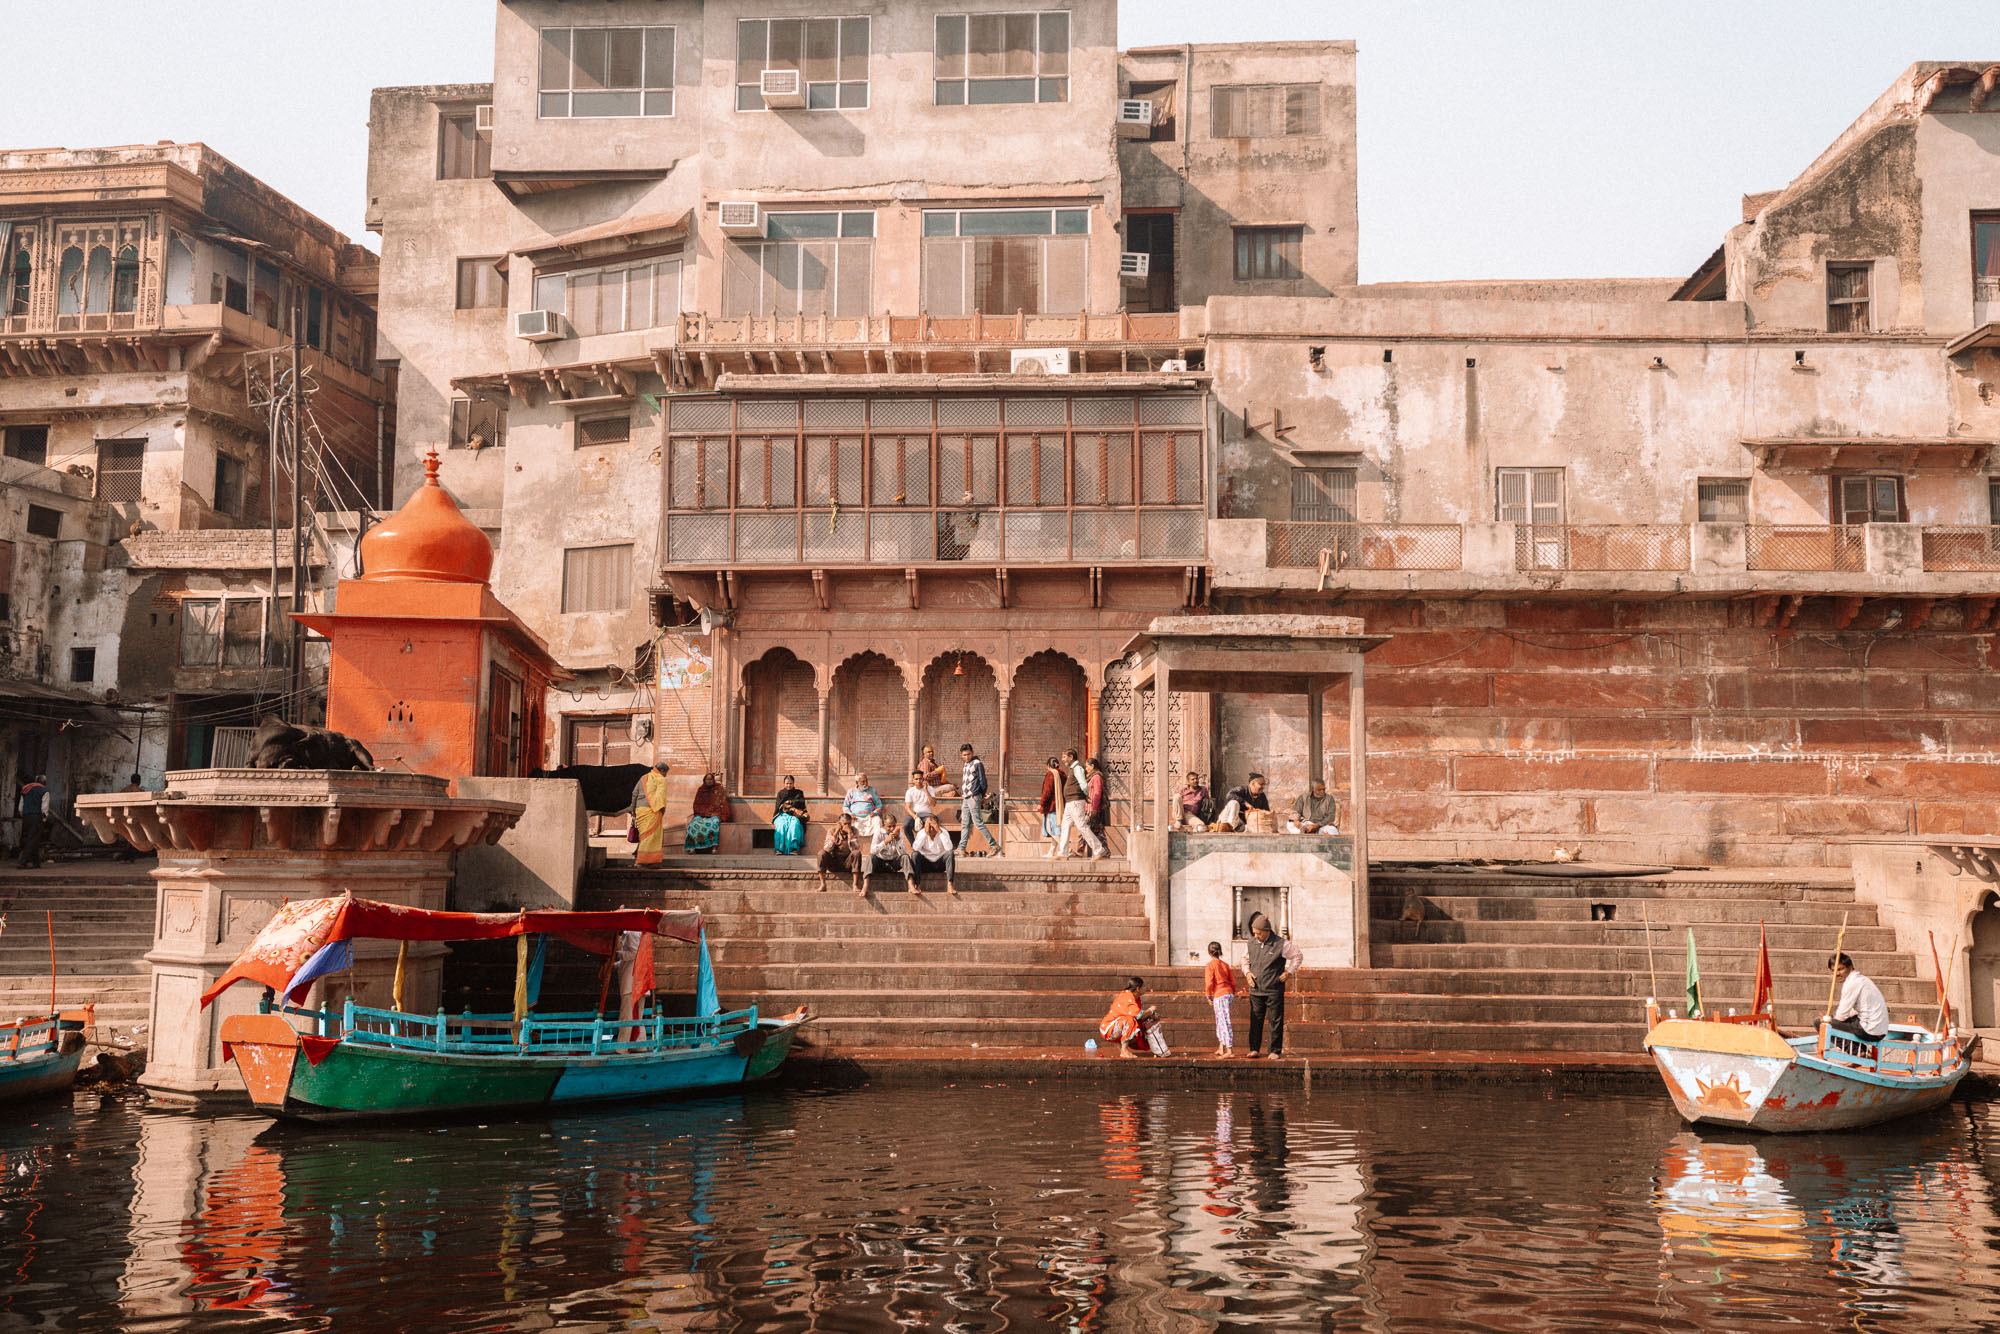 View of Mathura, India riverbank during Holi festivfal via @finduslost